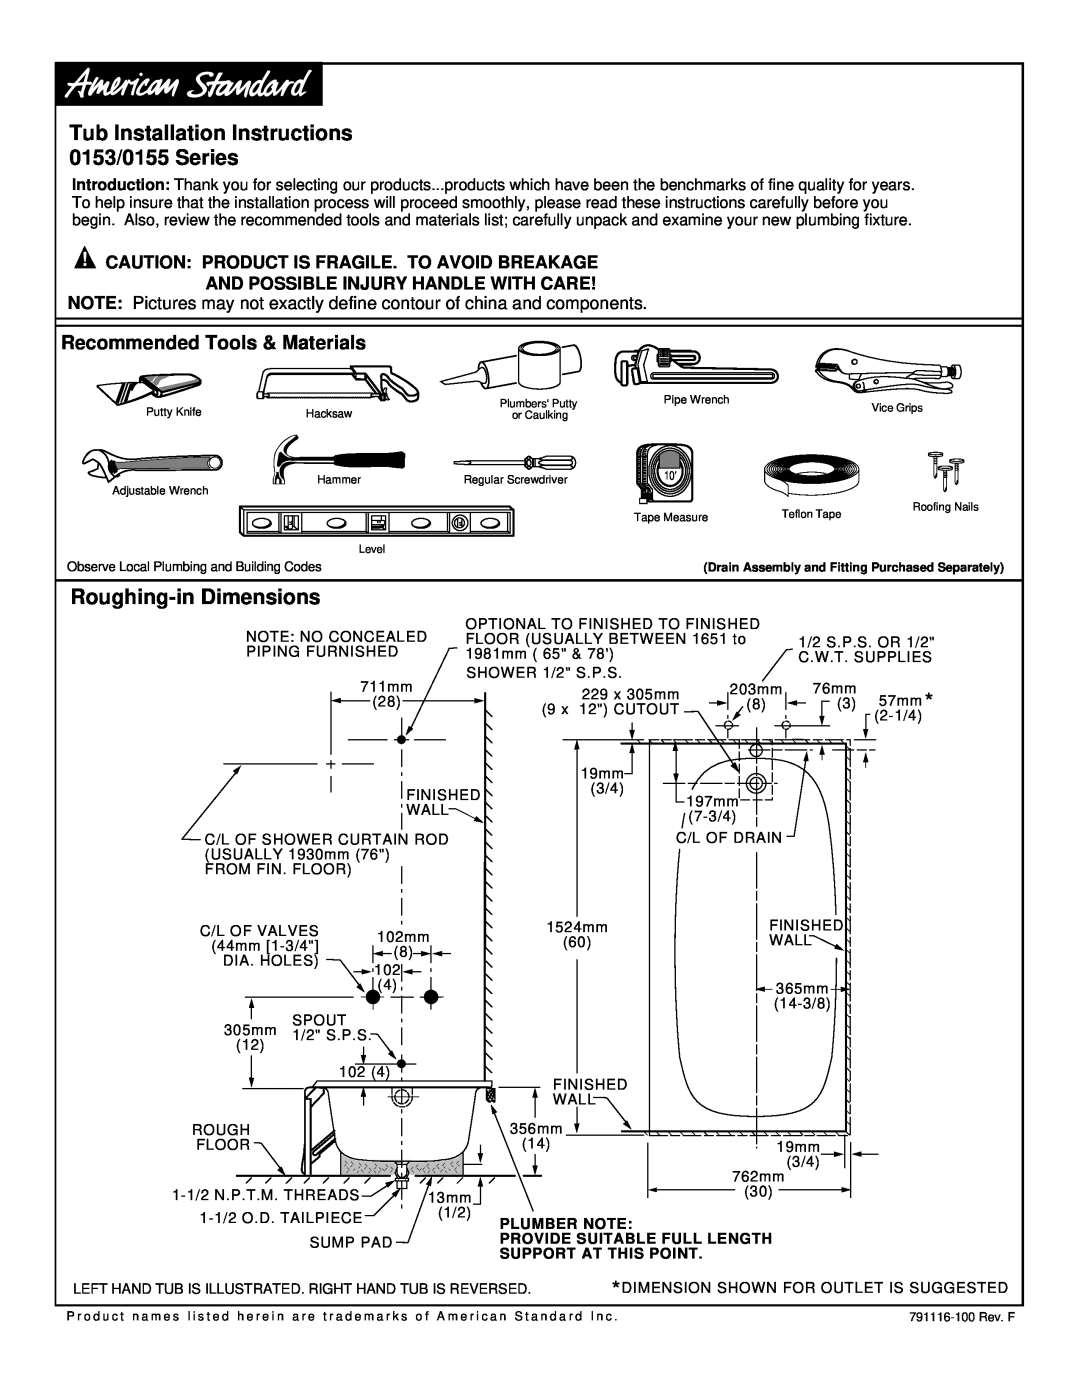 American Standard installation instructions Tub Installation Instructions 0153/0155 Series, Roughing-inDimensions 